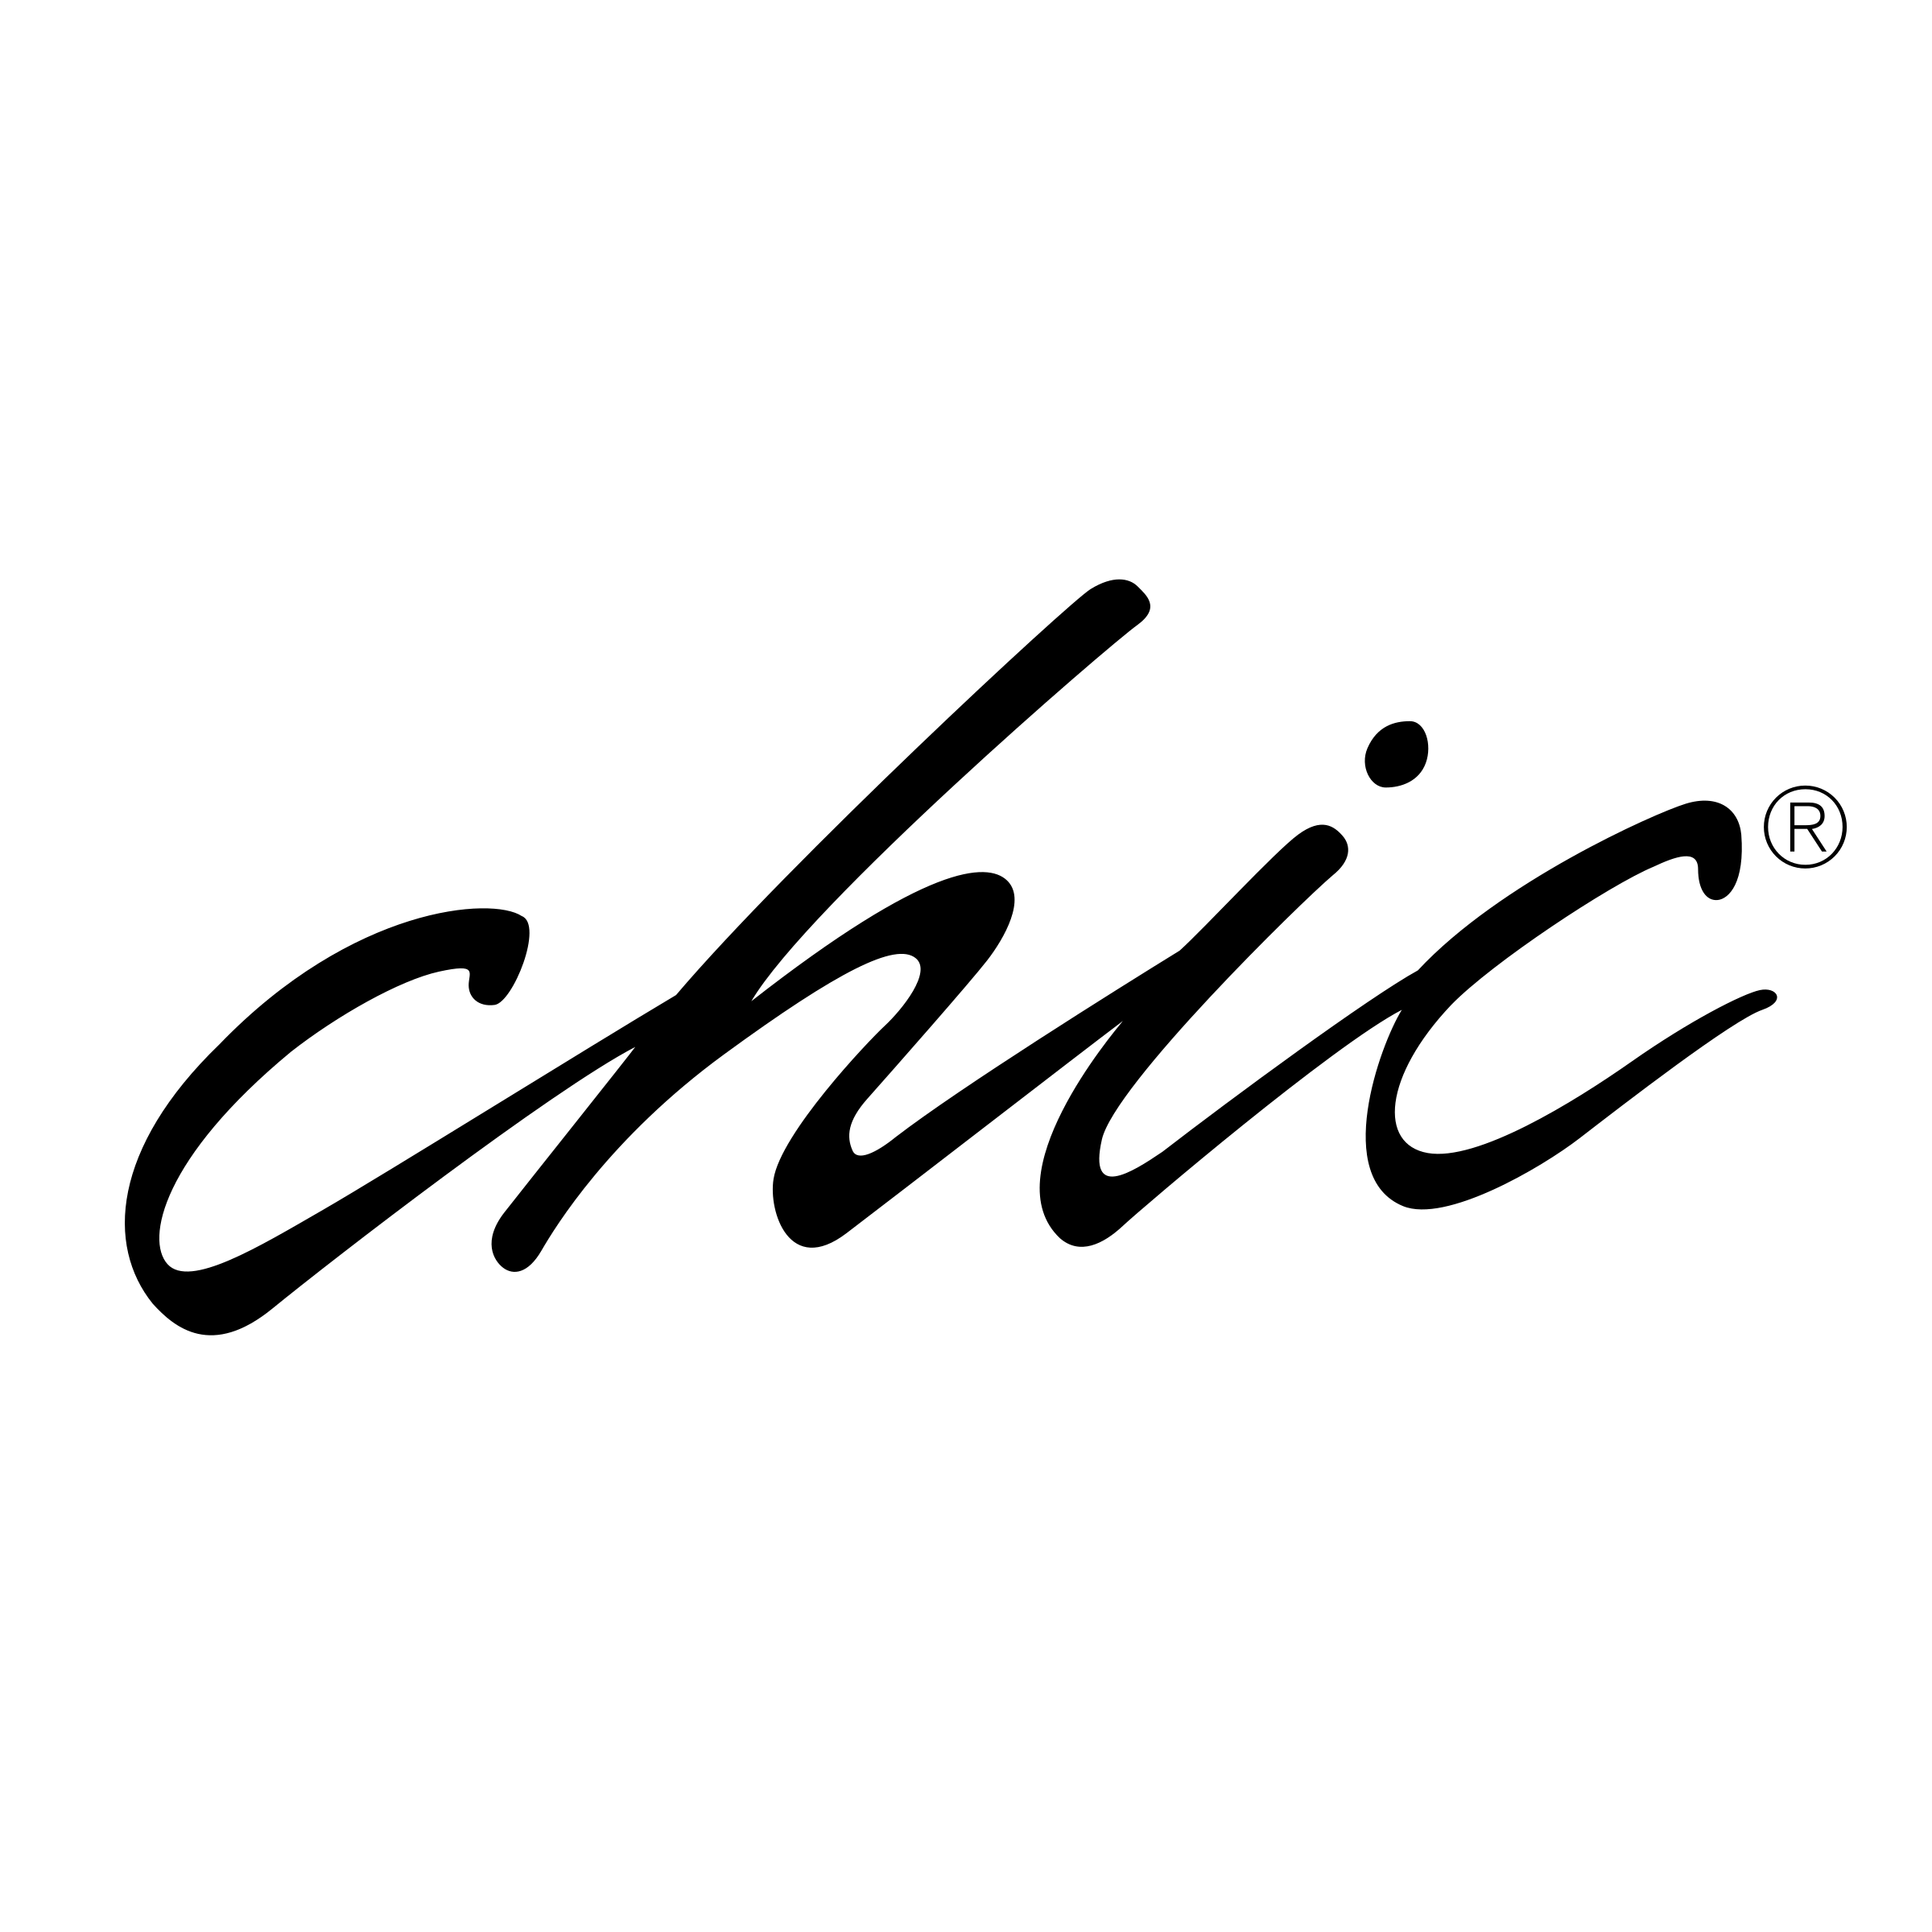 Chic Logo - Chic Logo PNG Transparent & SVG Vector - Freebie Supply